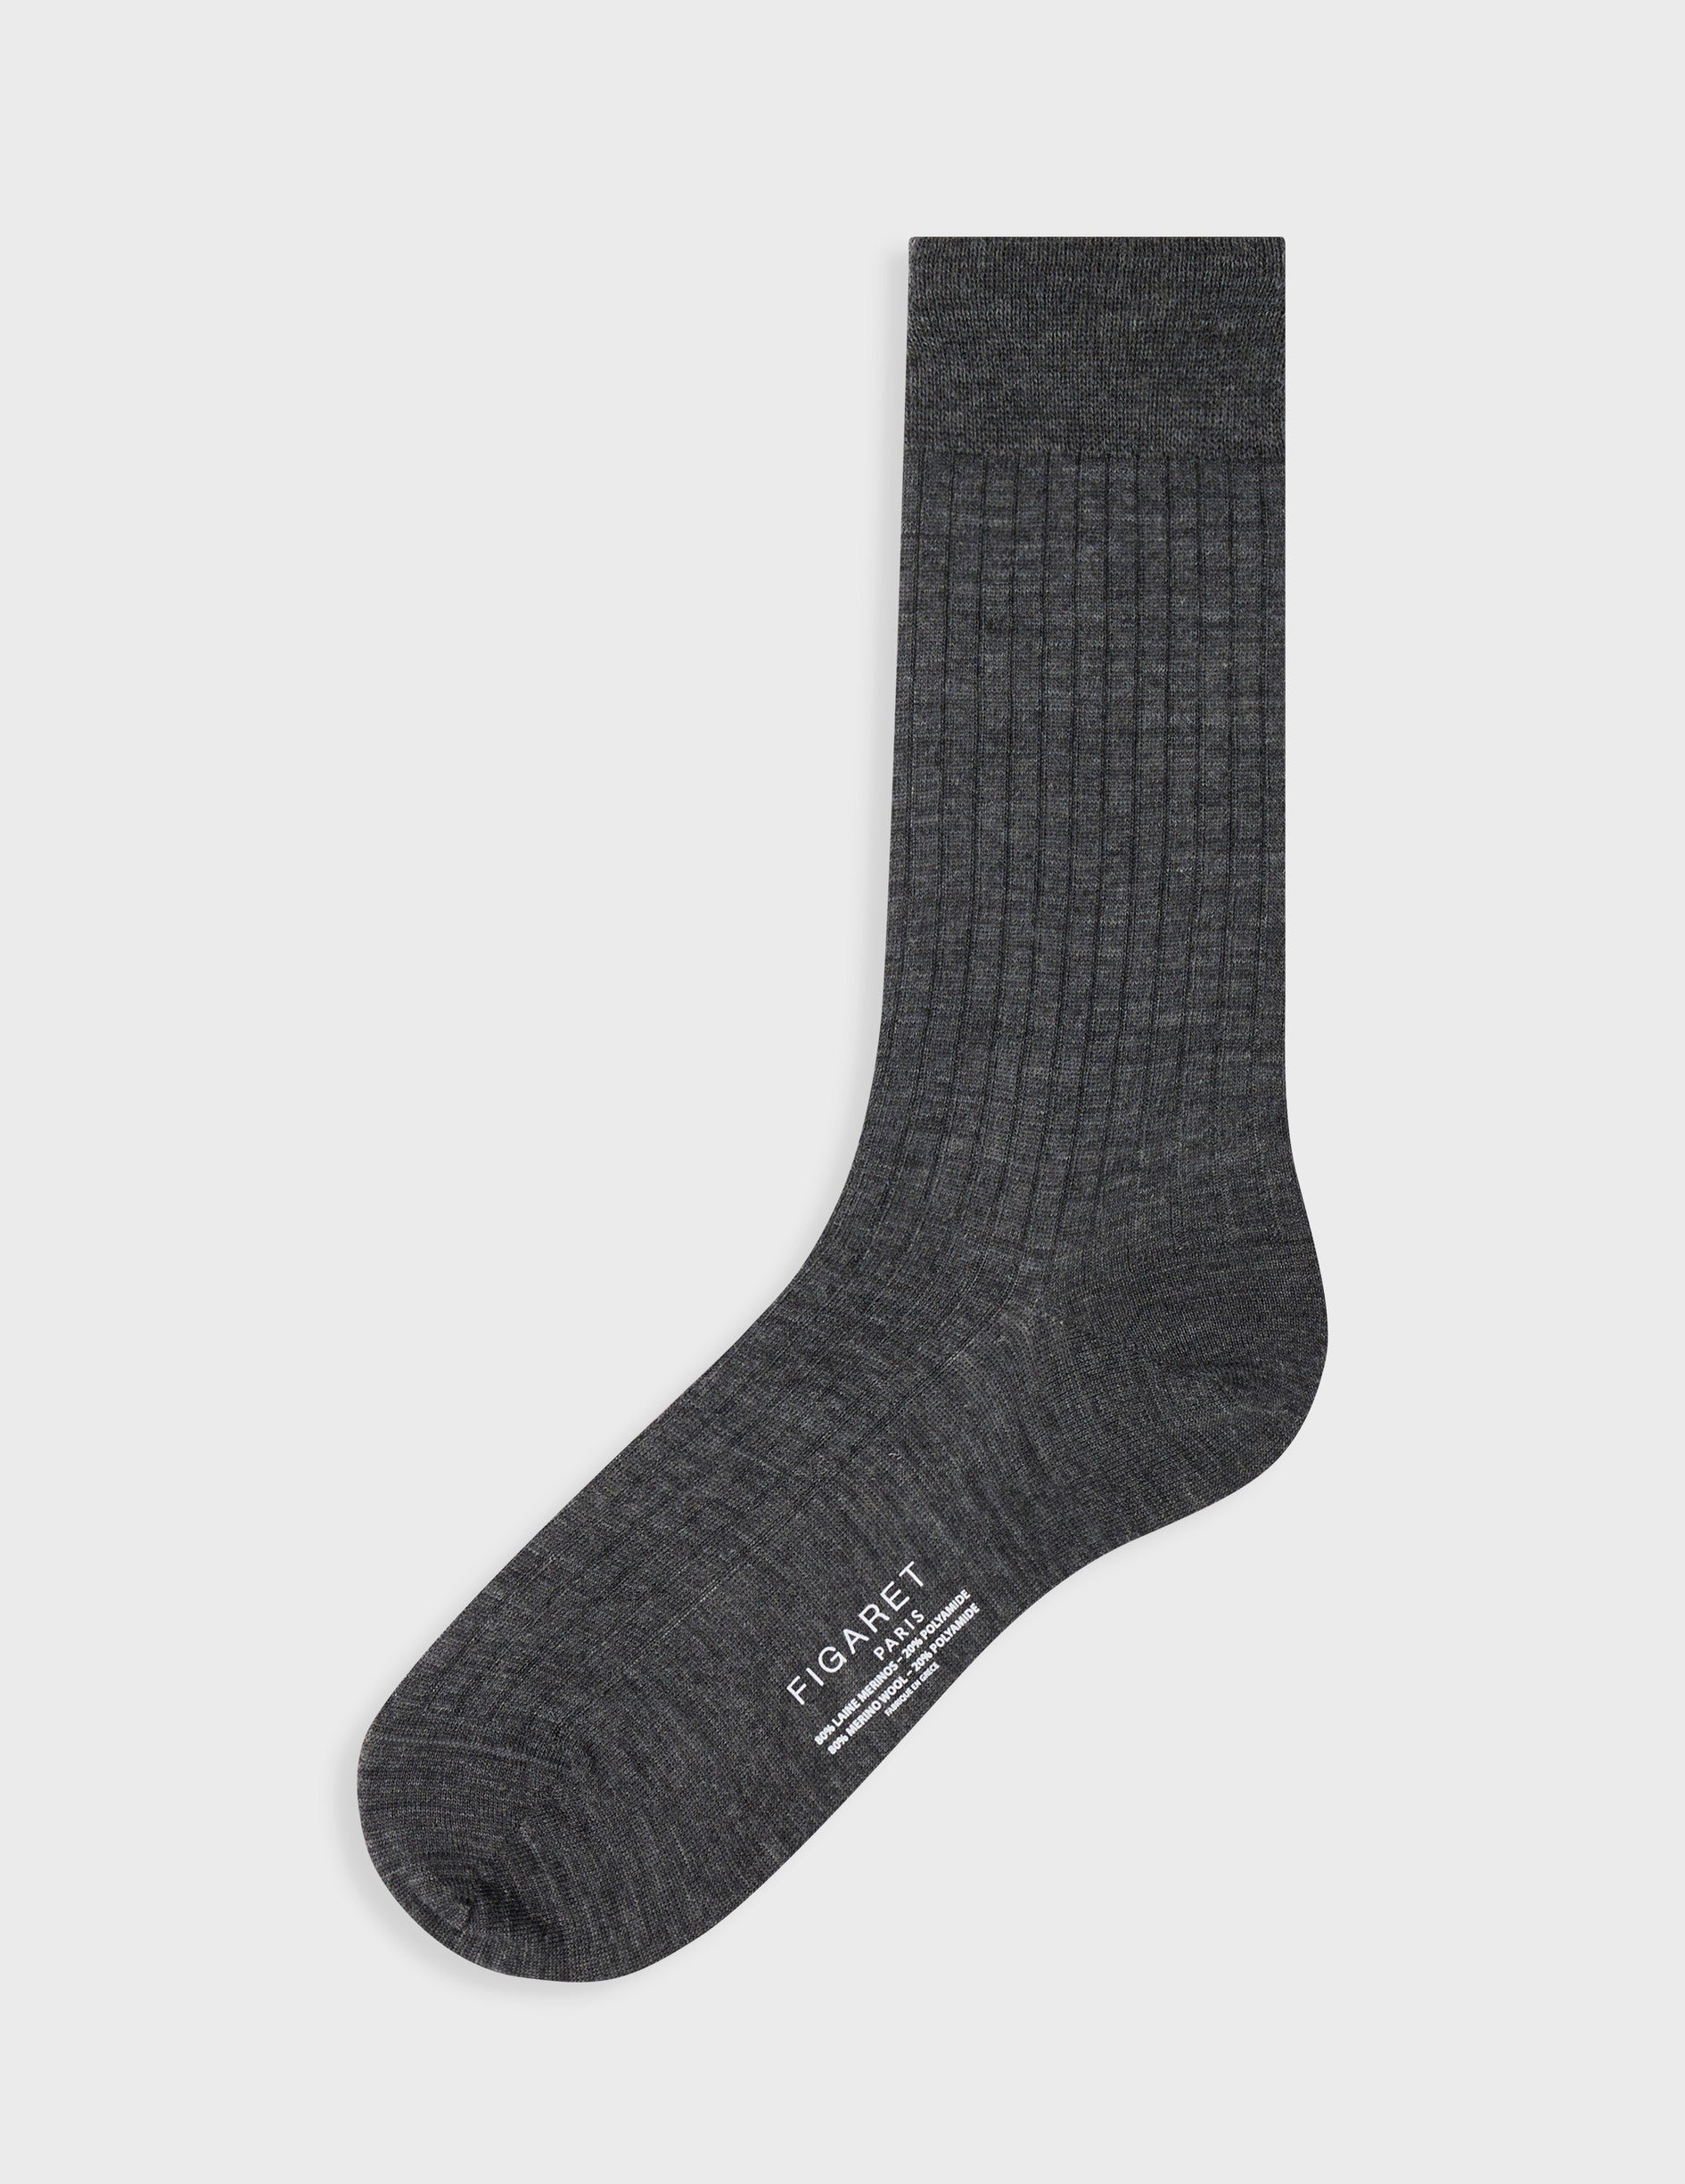 Gray wool socks